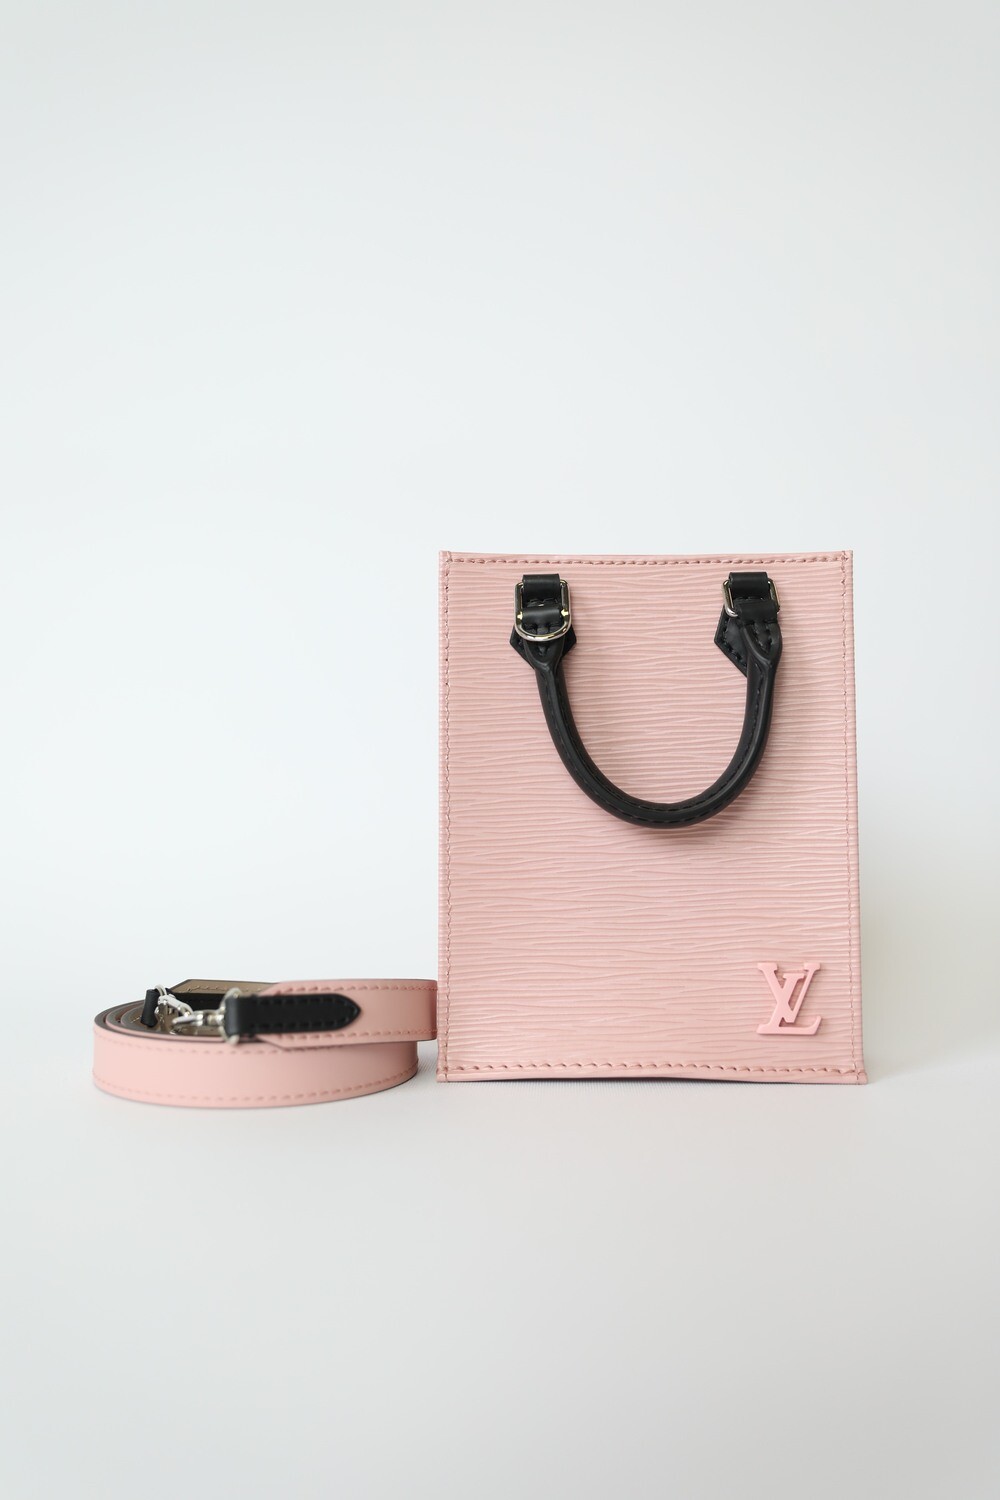 Louis Vuitton Rose Ballerine and Black EPI Petite Sac Plat Silver Hardware, 2020 (Like New), Pink/Black Womens Handbag